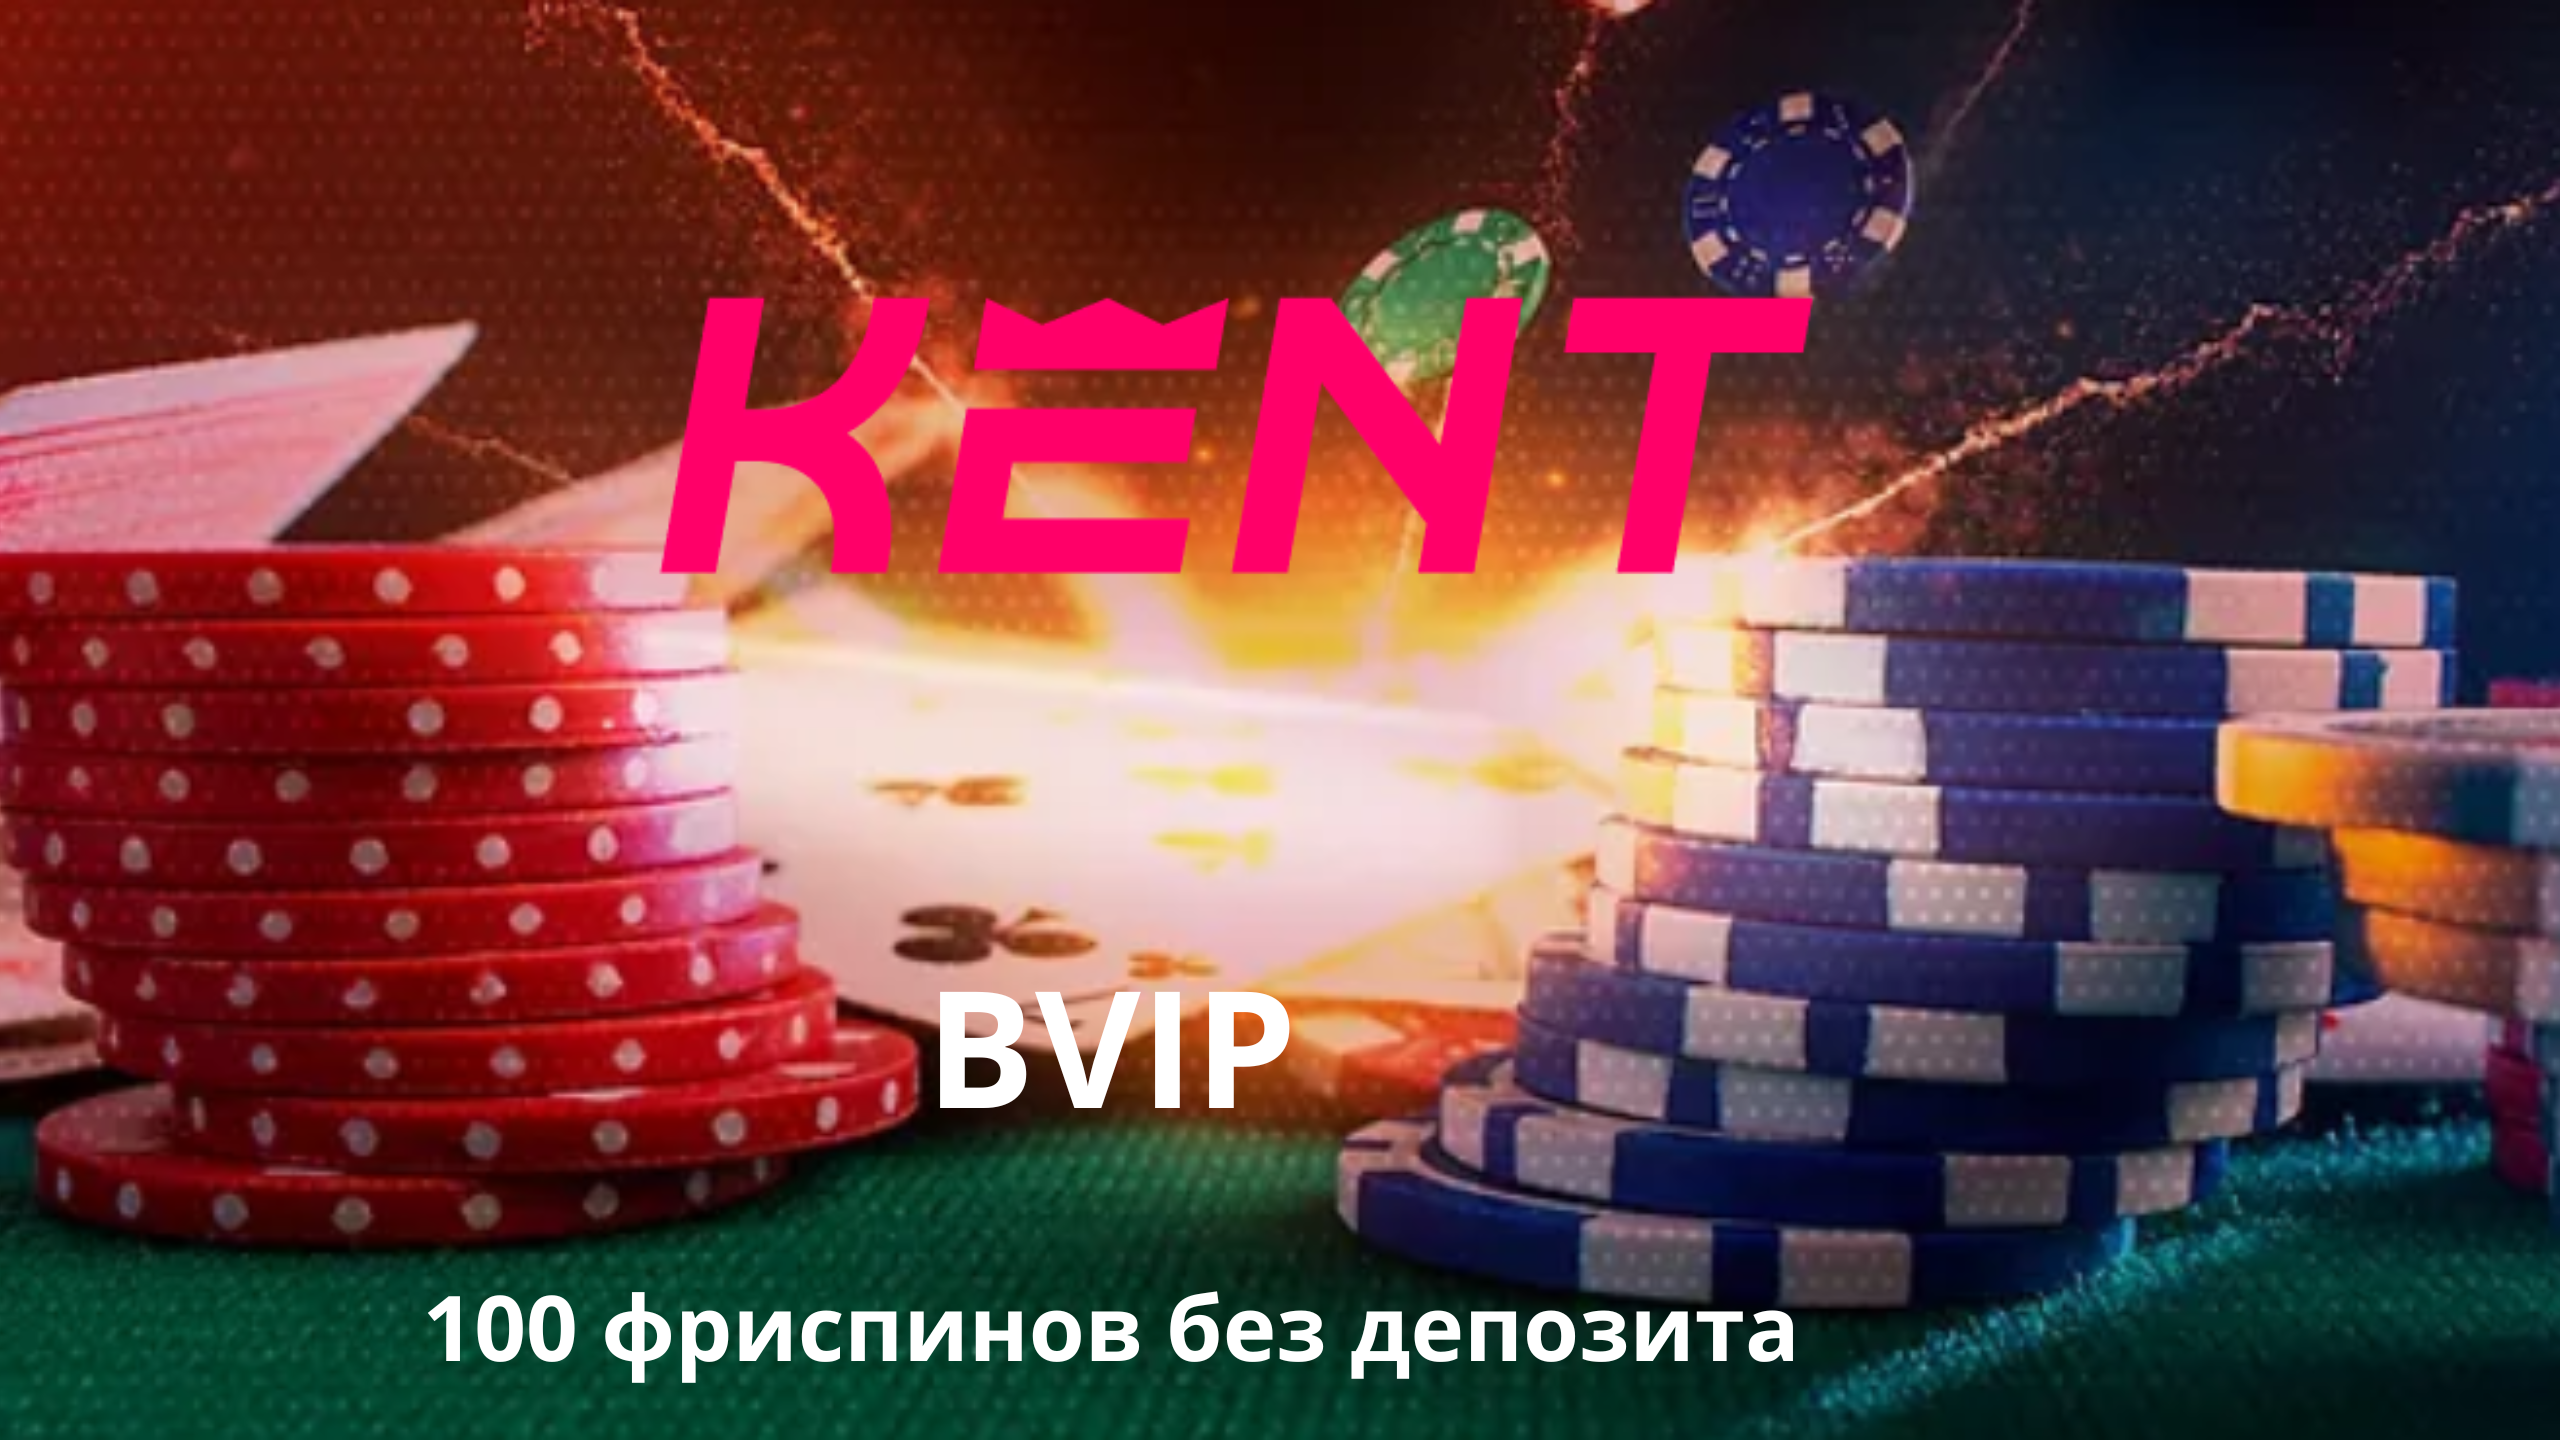 Сайт kent casino kent casino org ru